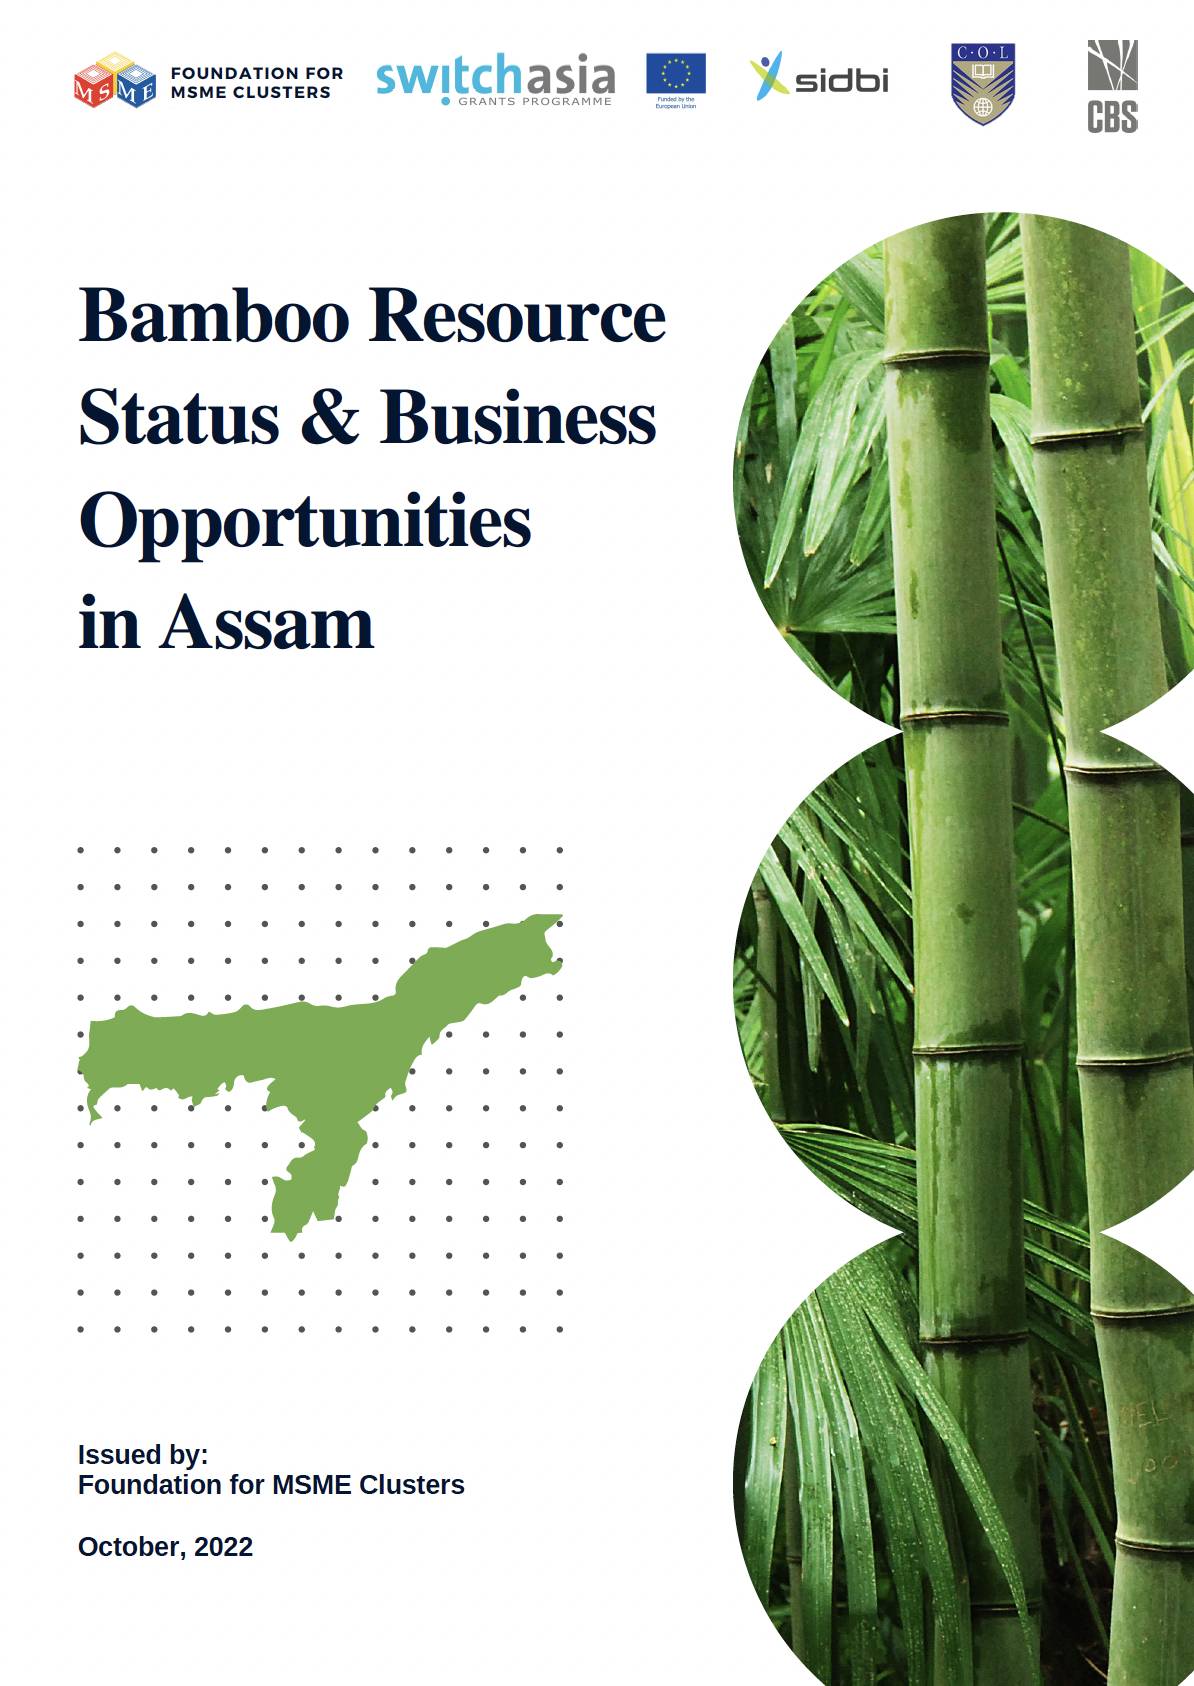 Bamboo Resource Status & Business Opportunities in Assam